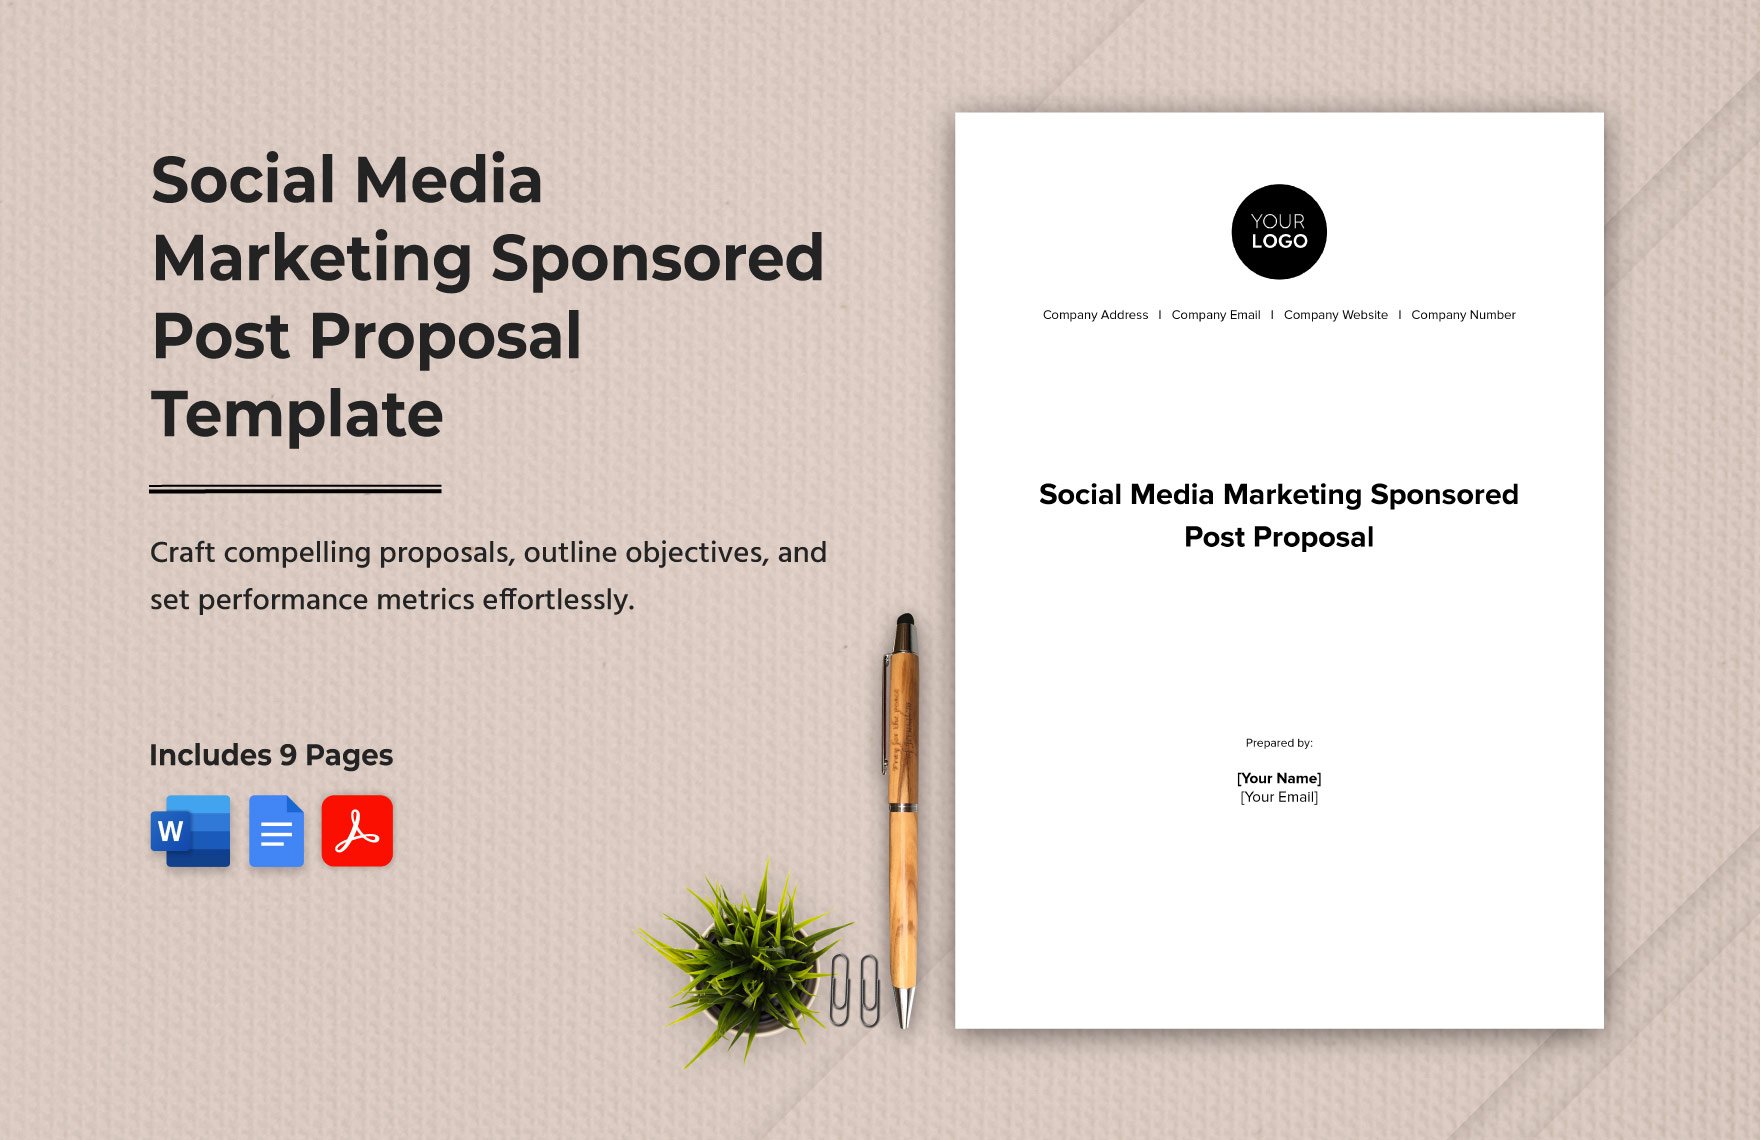 Social Media Marketing Sponsored Post Proposal Template in Word, Google Docs, PDF